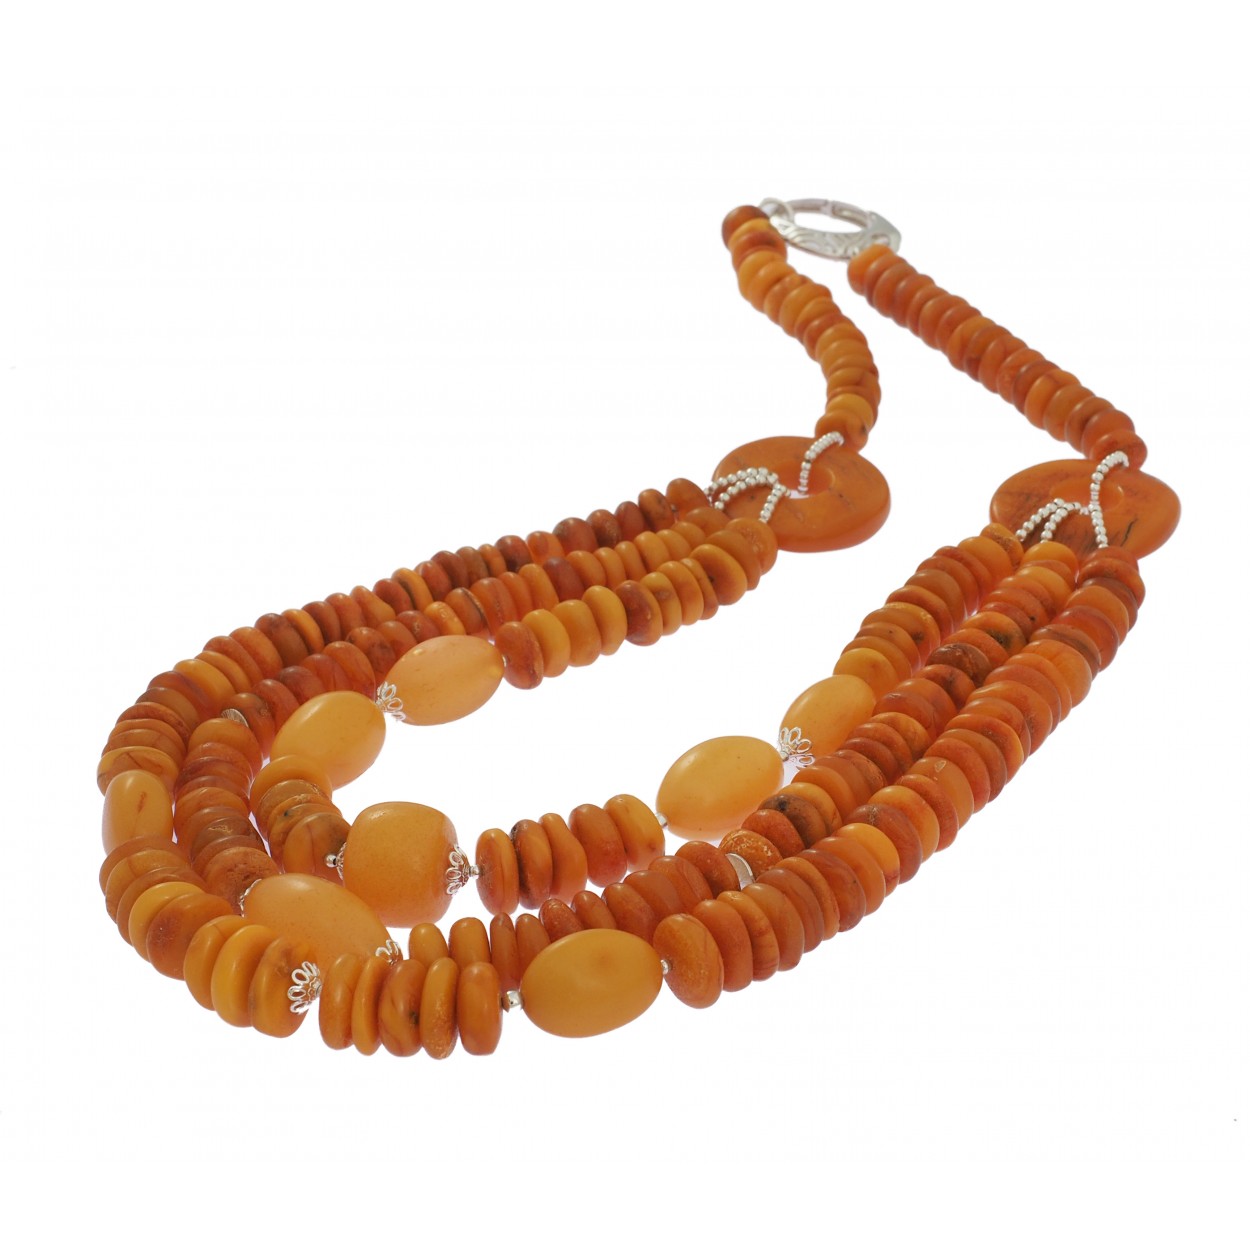  Tibetan Amber Necklace